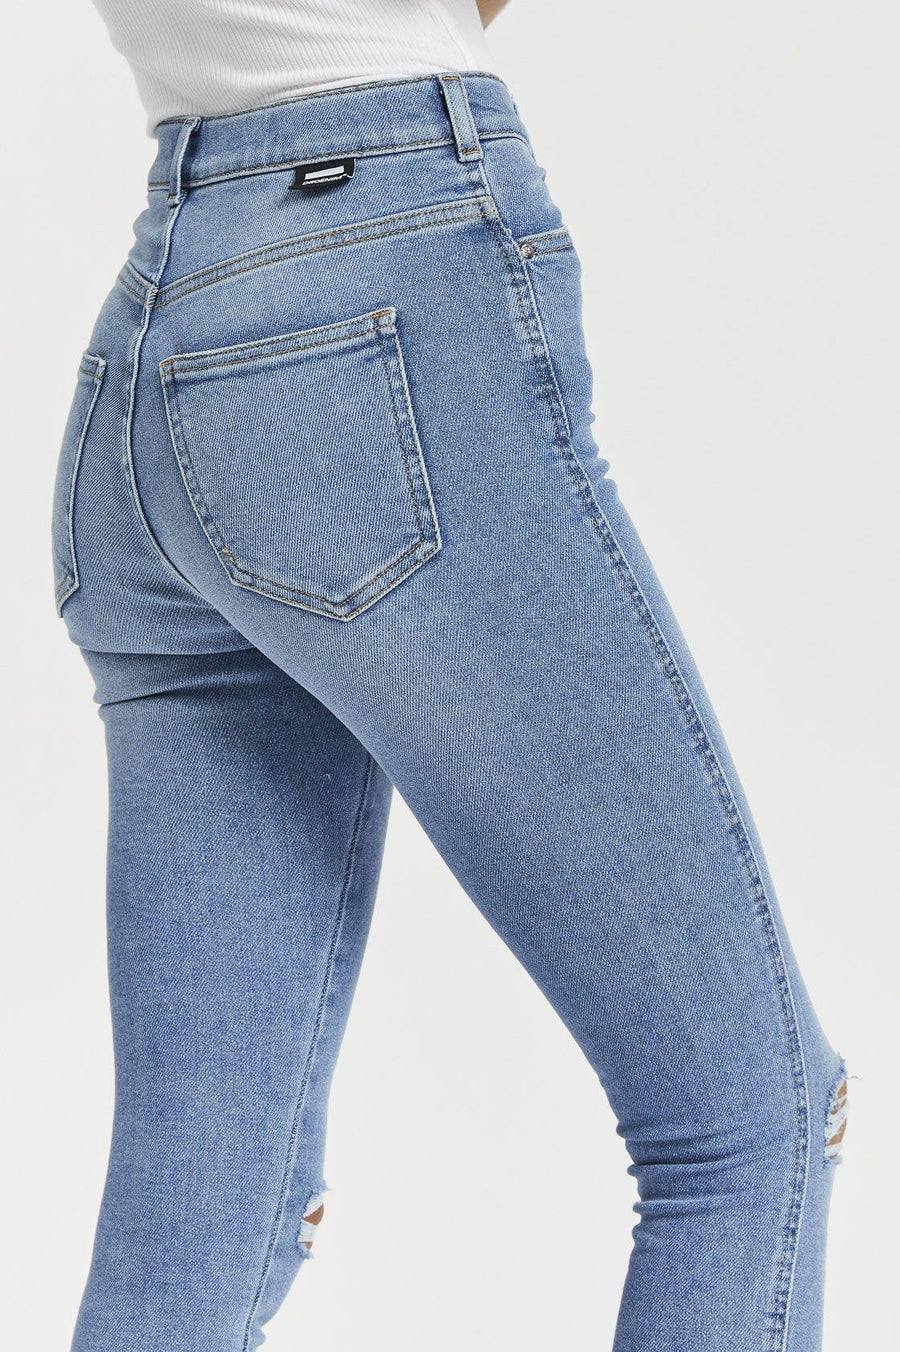 Moxy Jeans - West Coast Light Blue Ripped Knees - Dr Denim Jeans - Australia & NZ